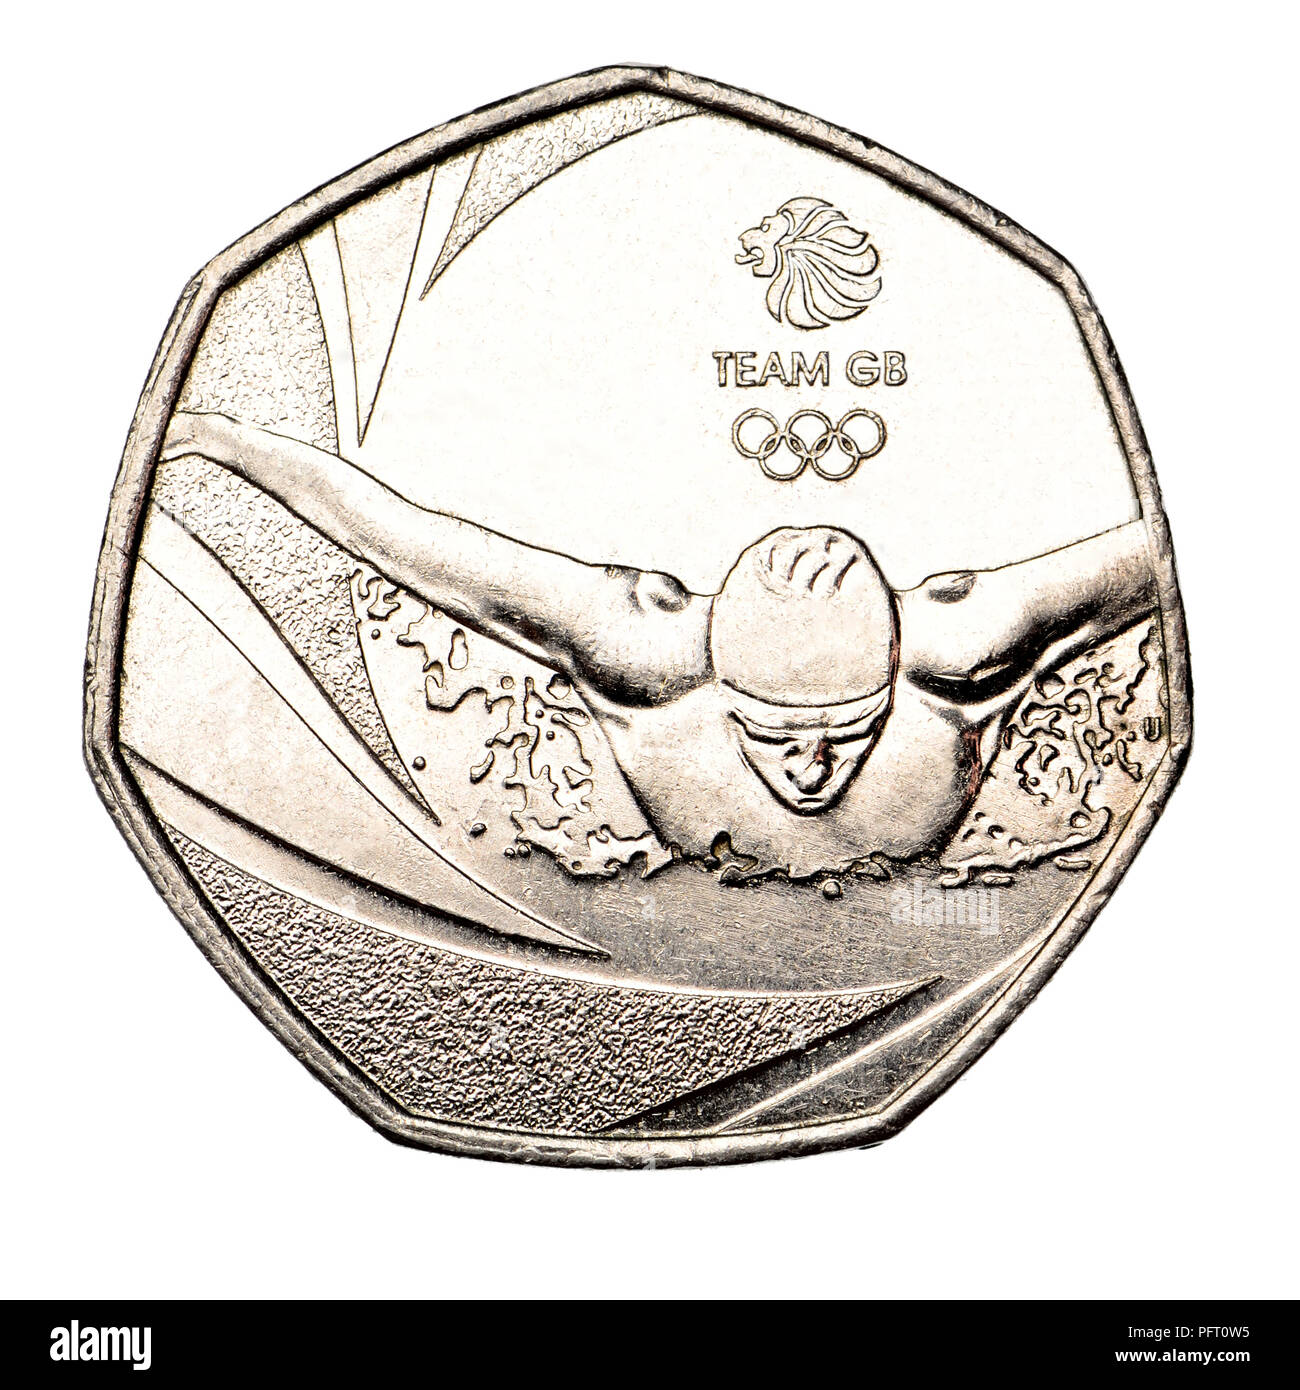 British commemorative 50p coin (2016: Tim Sharp) Team GB, 2016 Olympics Stock Photo